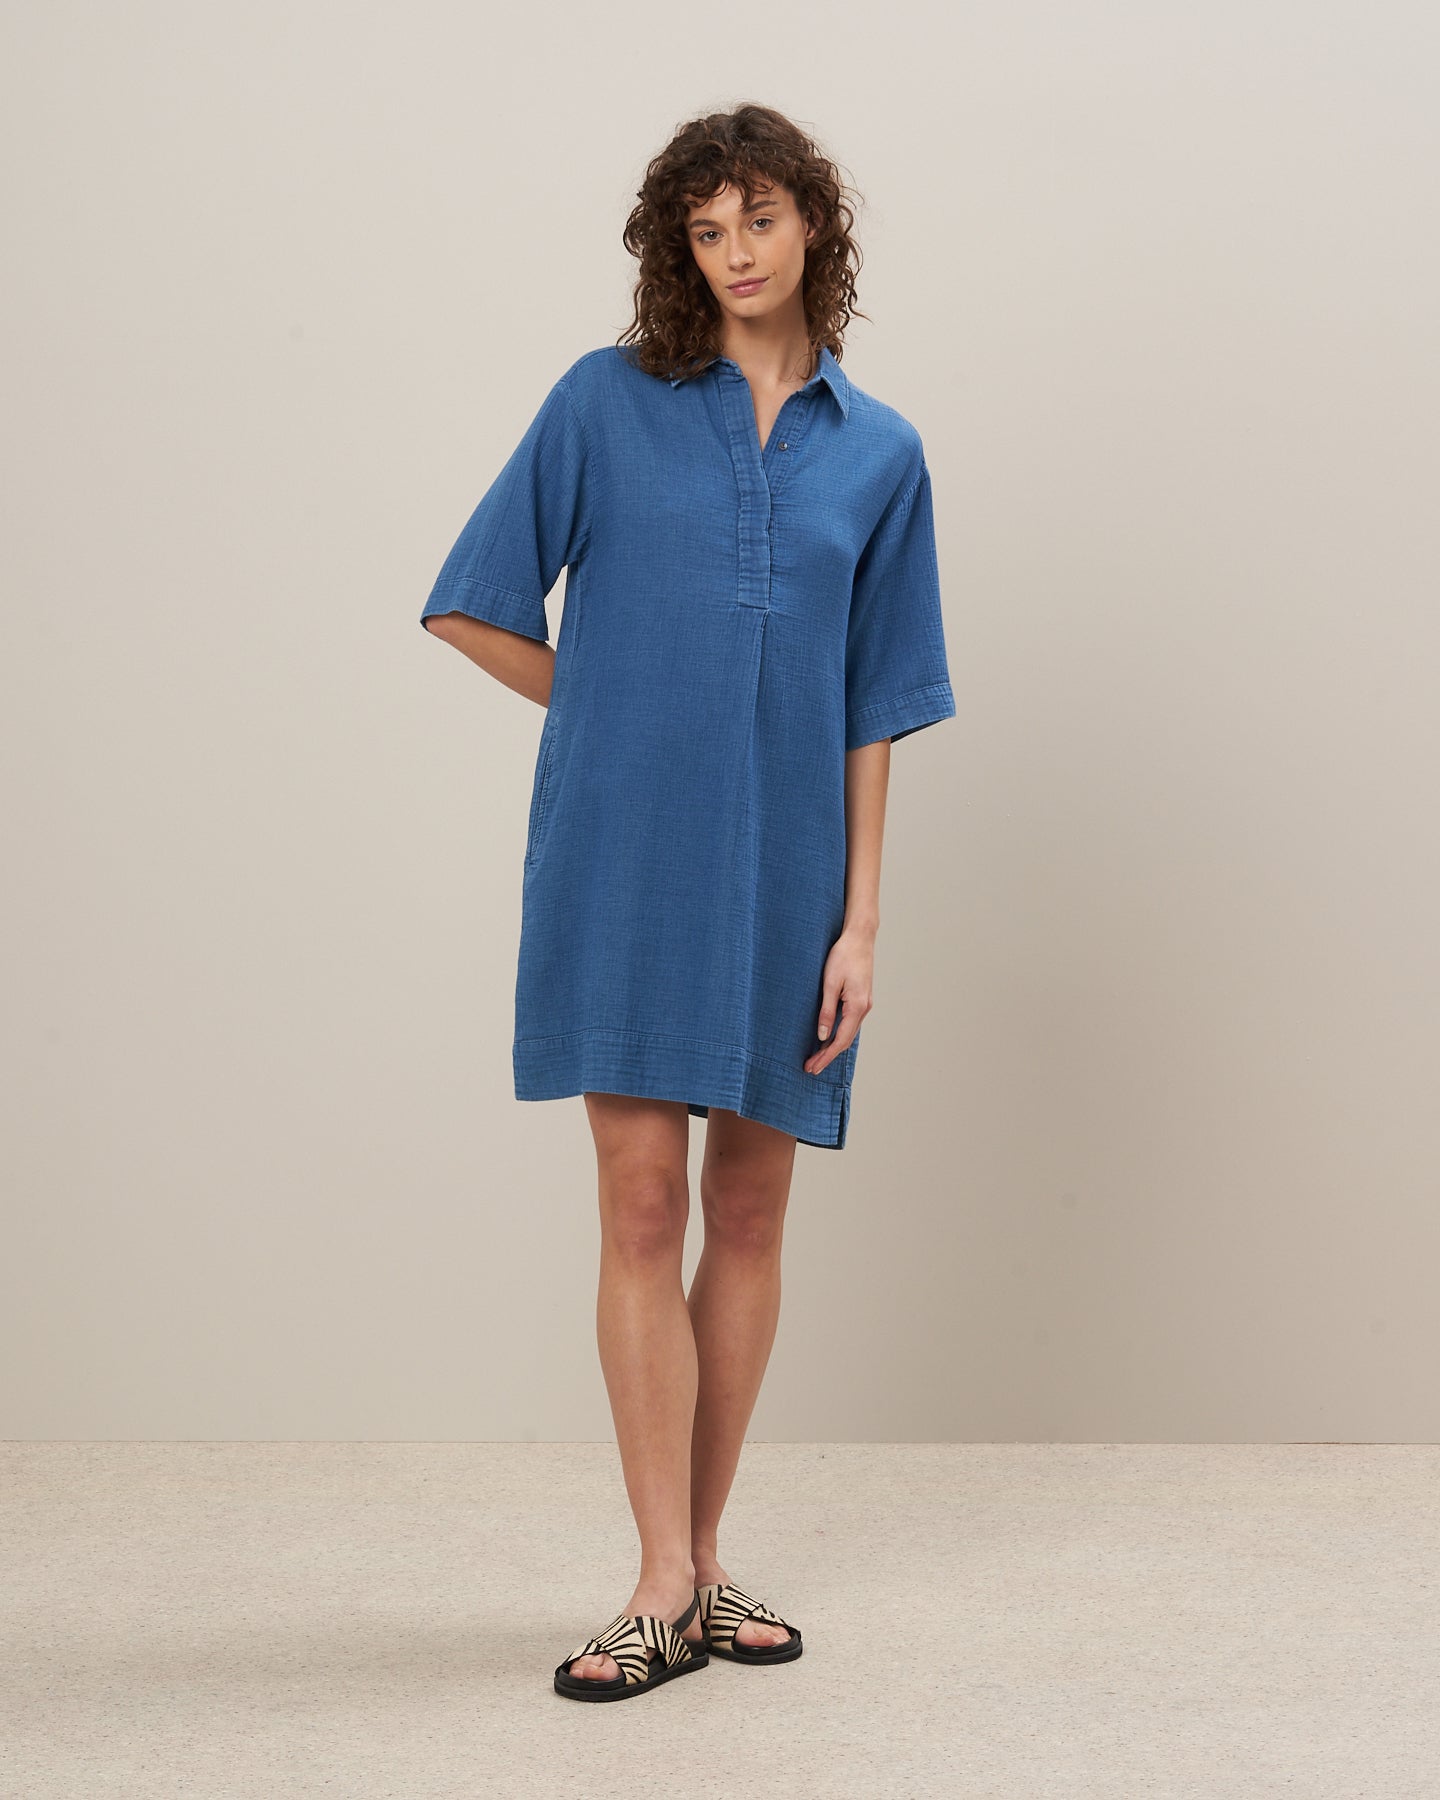 Robe Femme en coton Bleu indigo Roster BBRN616-02